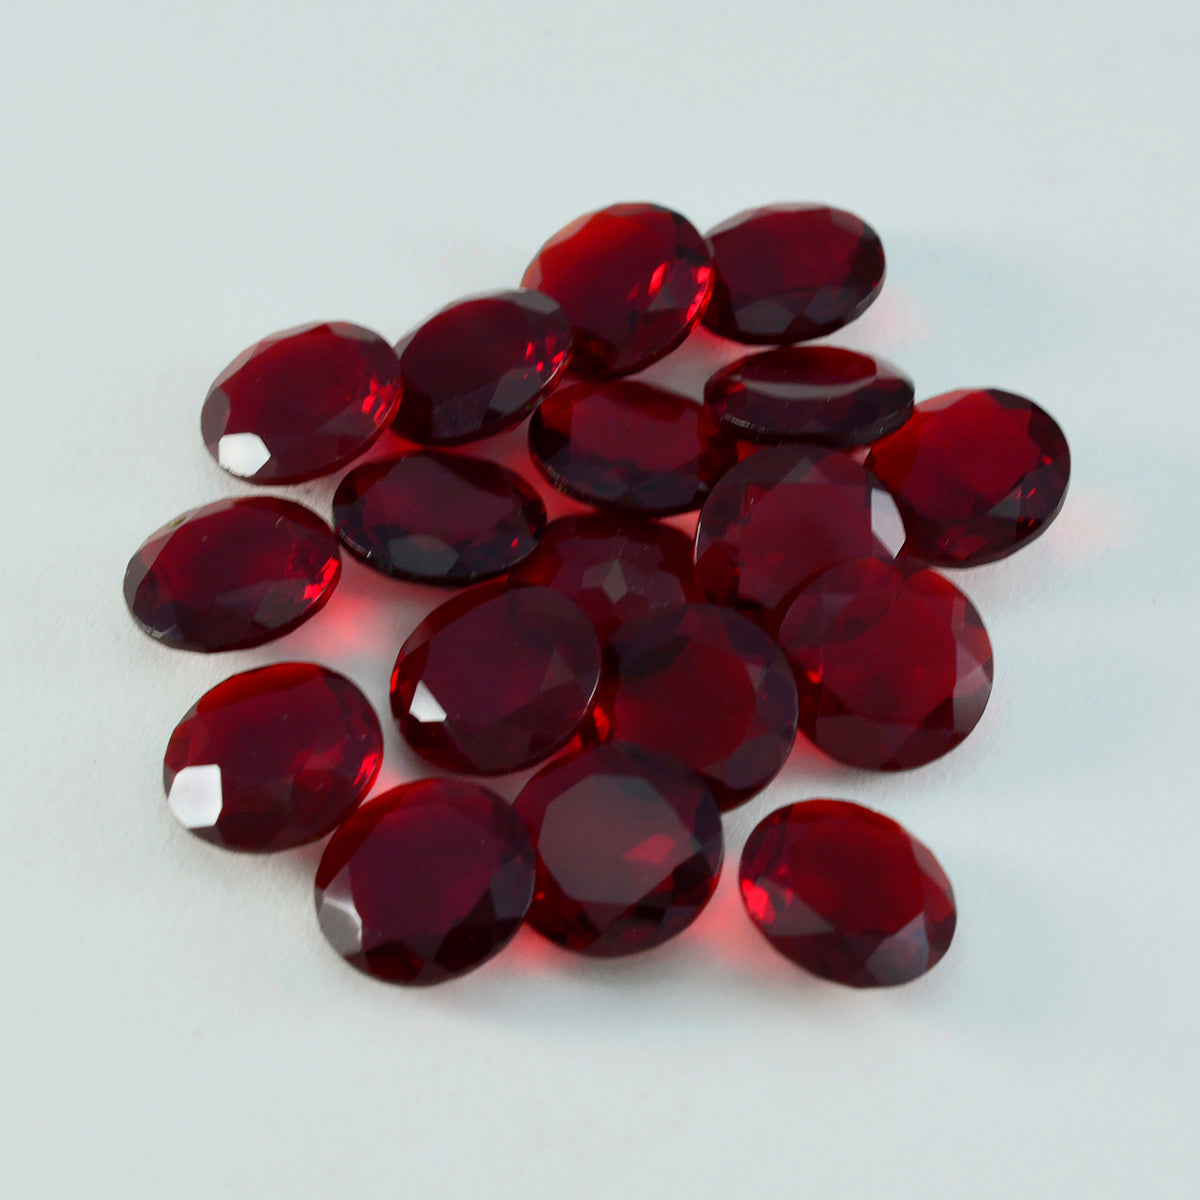 riyogems 1st röd rubin cz fasetterad 10x10 mm rund form vacker kvalitetspärla